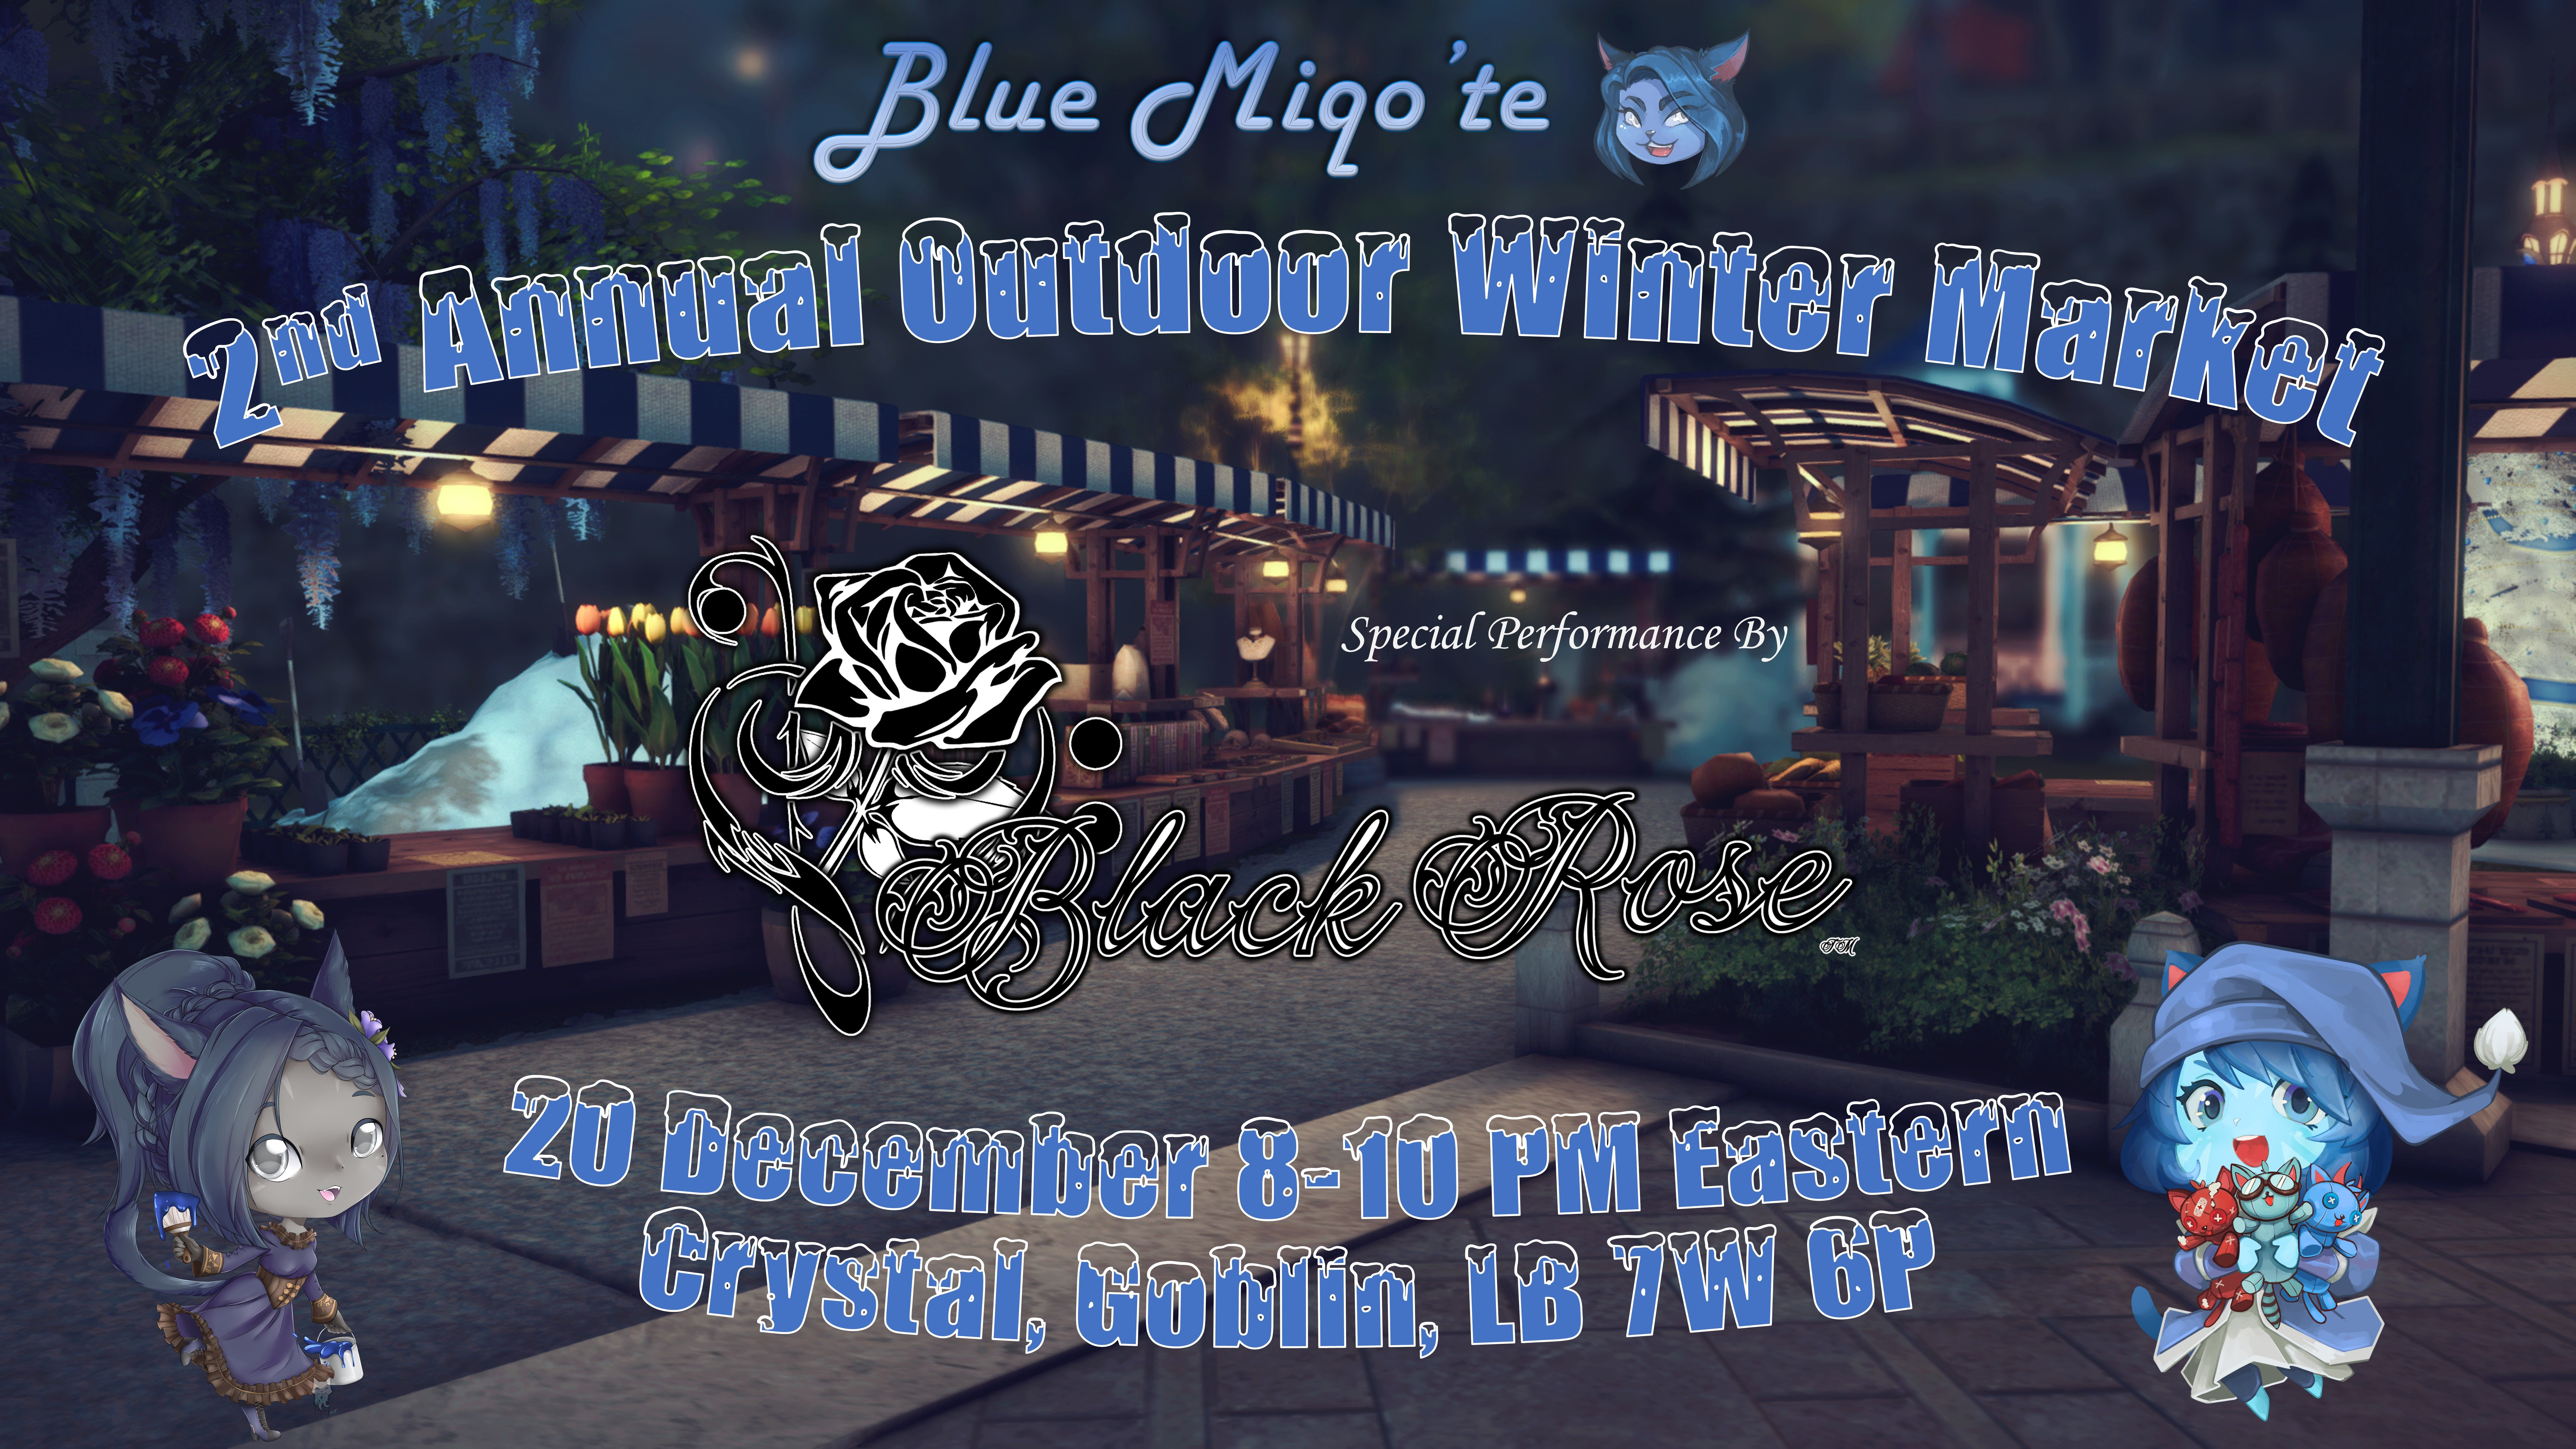 Blue Miqotes outdoor winter market flyer